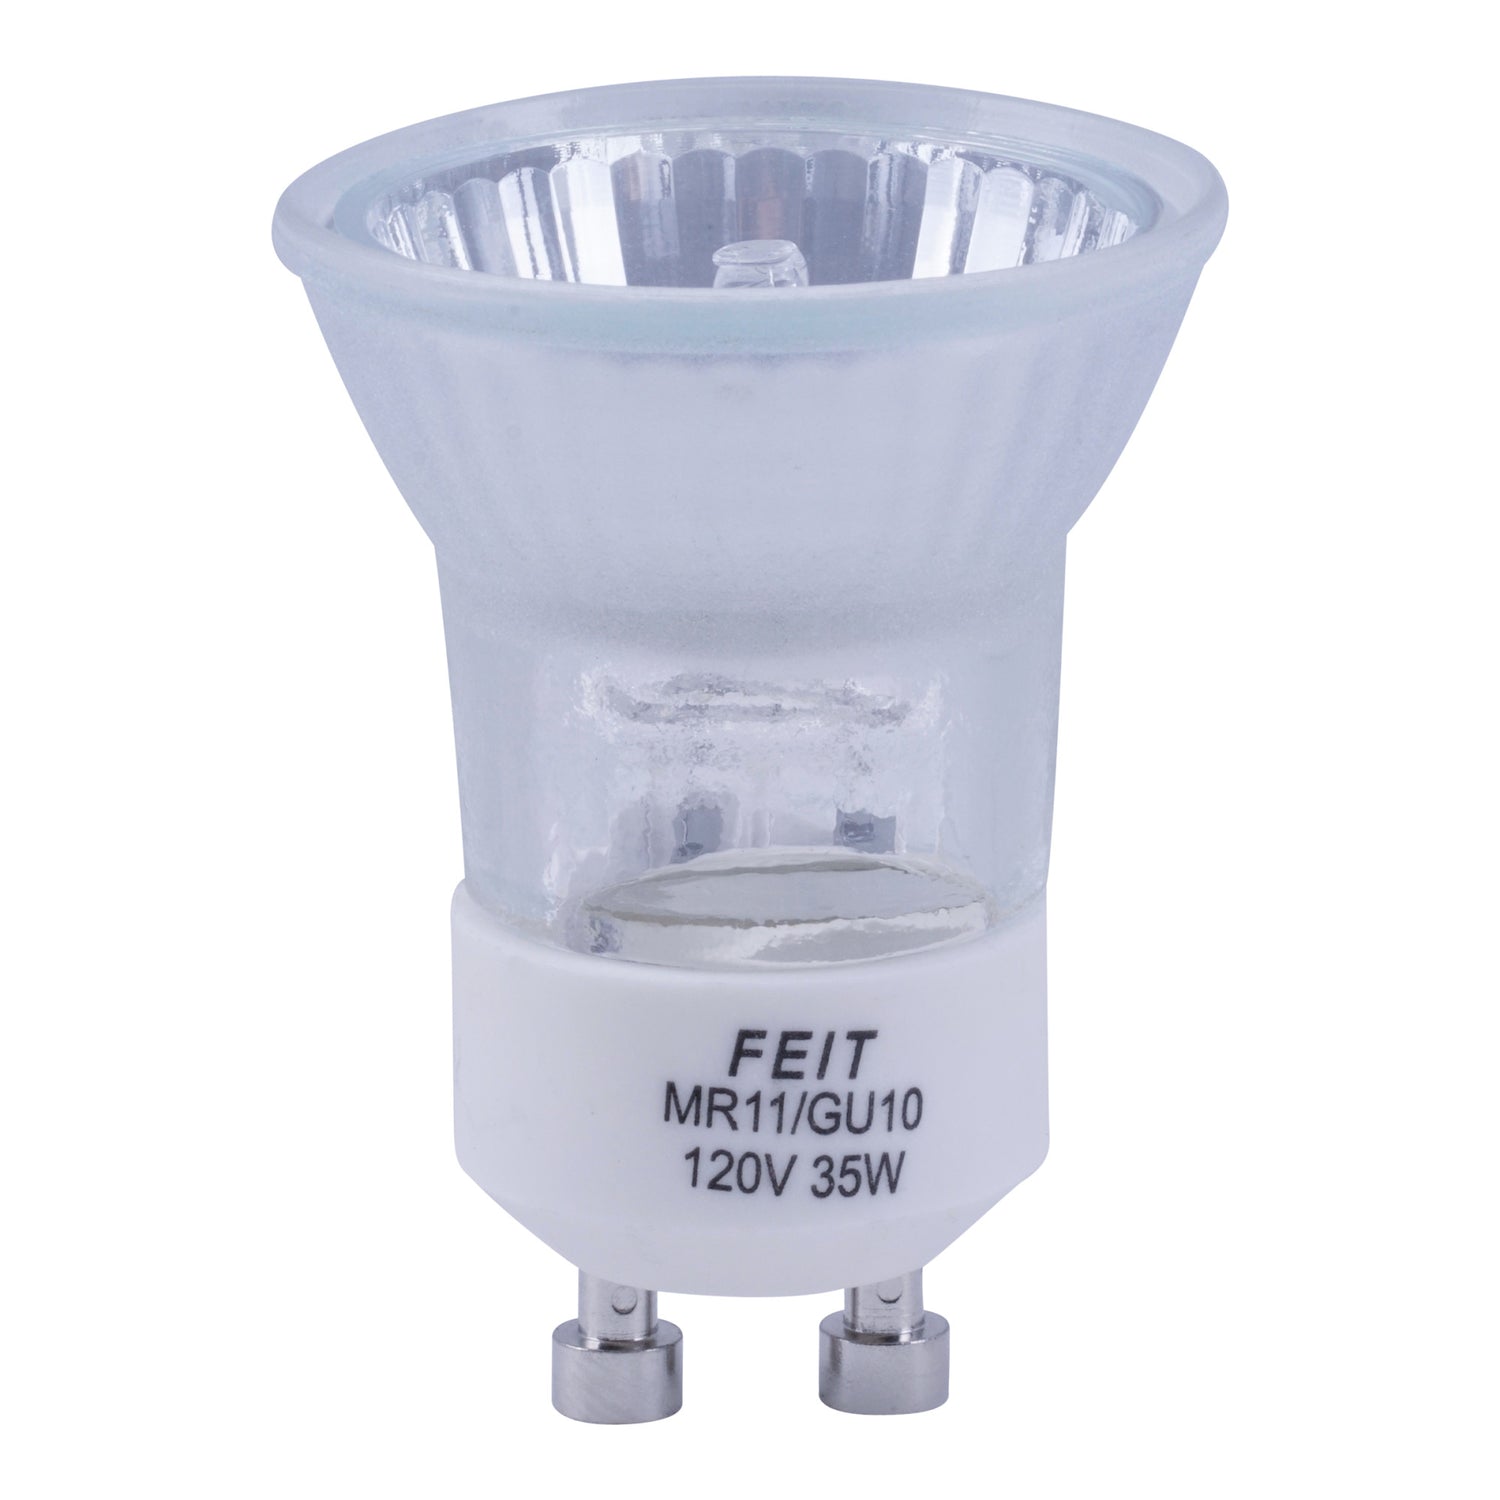 35W Frost GU10 Base Halogen Light Bulb (3-Pack)